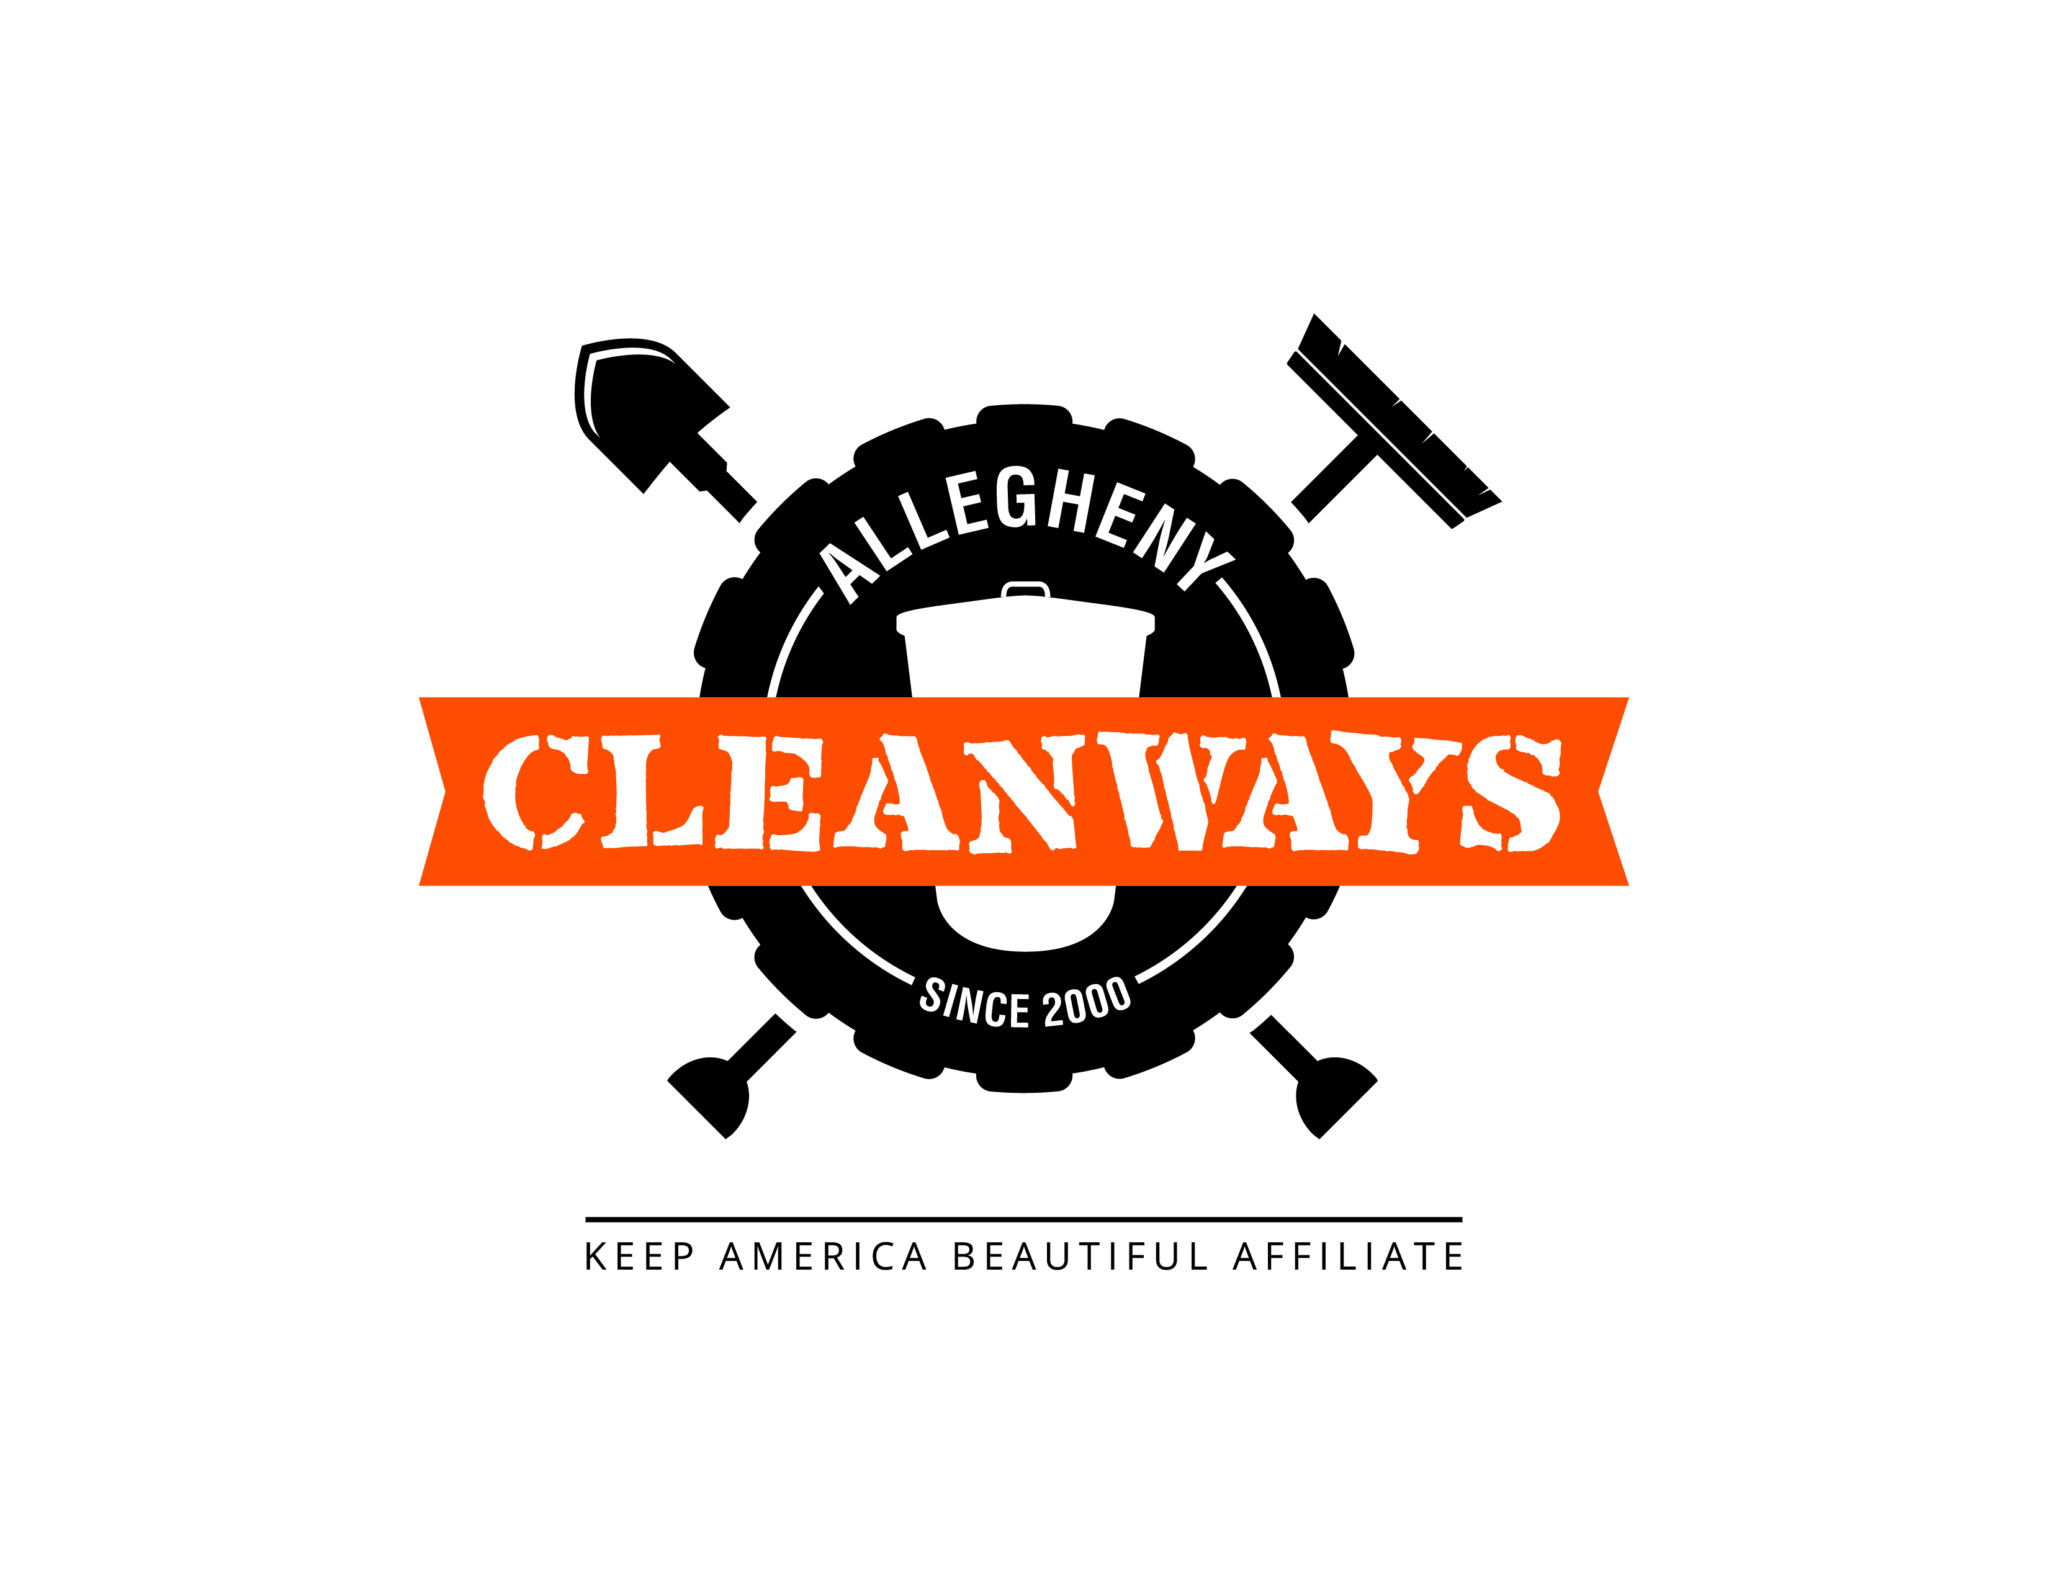 Allegheny Cleanways logo